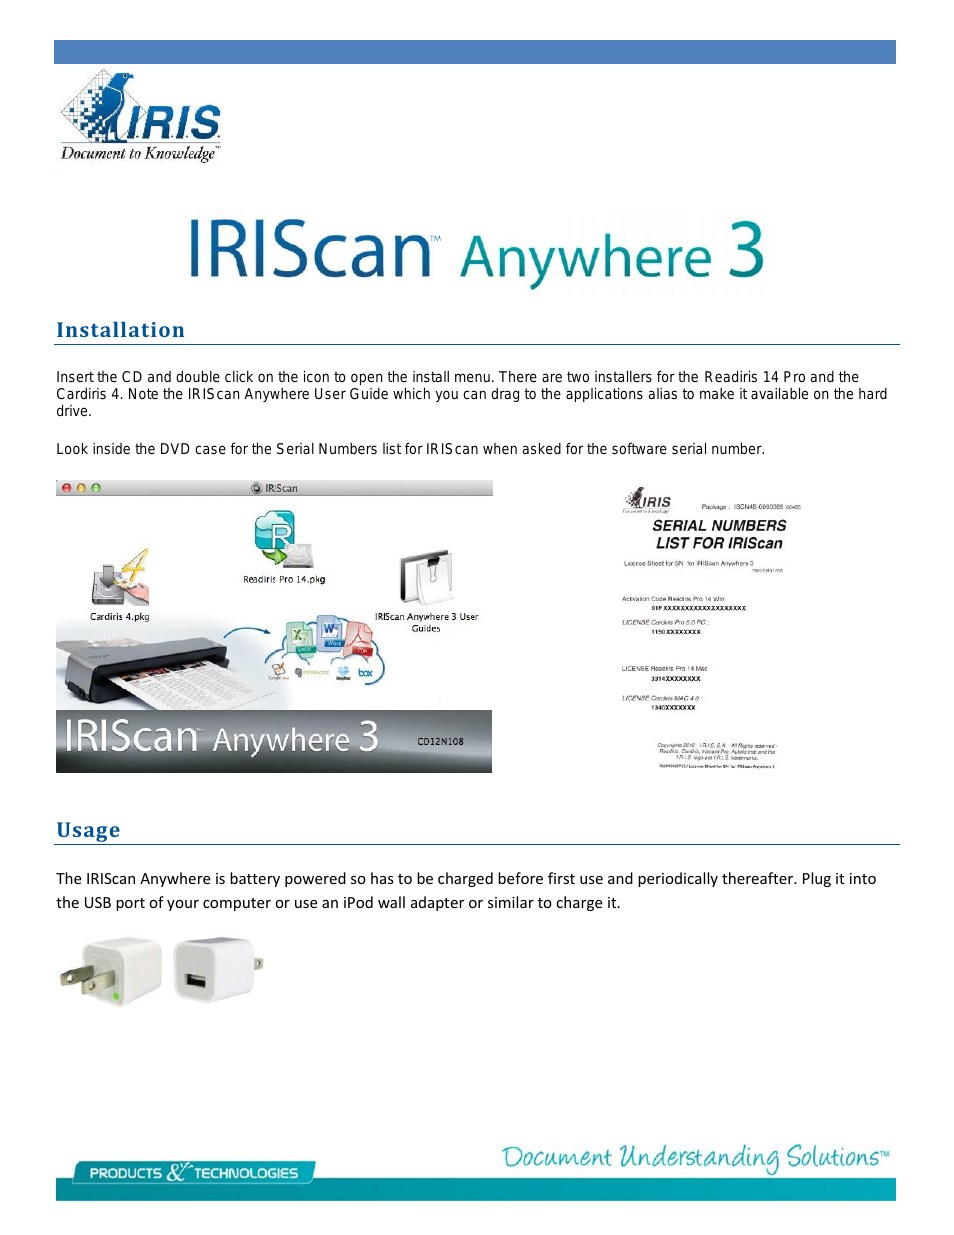 IRIScan Anywhere 3 for Mac